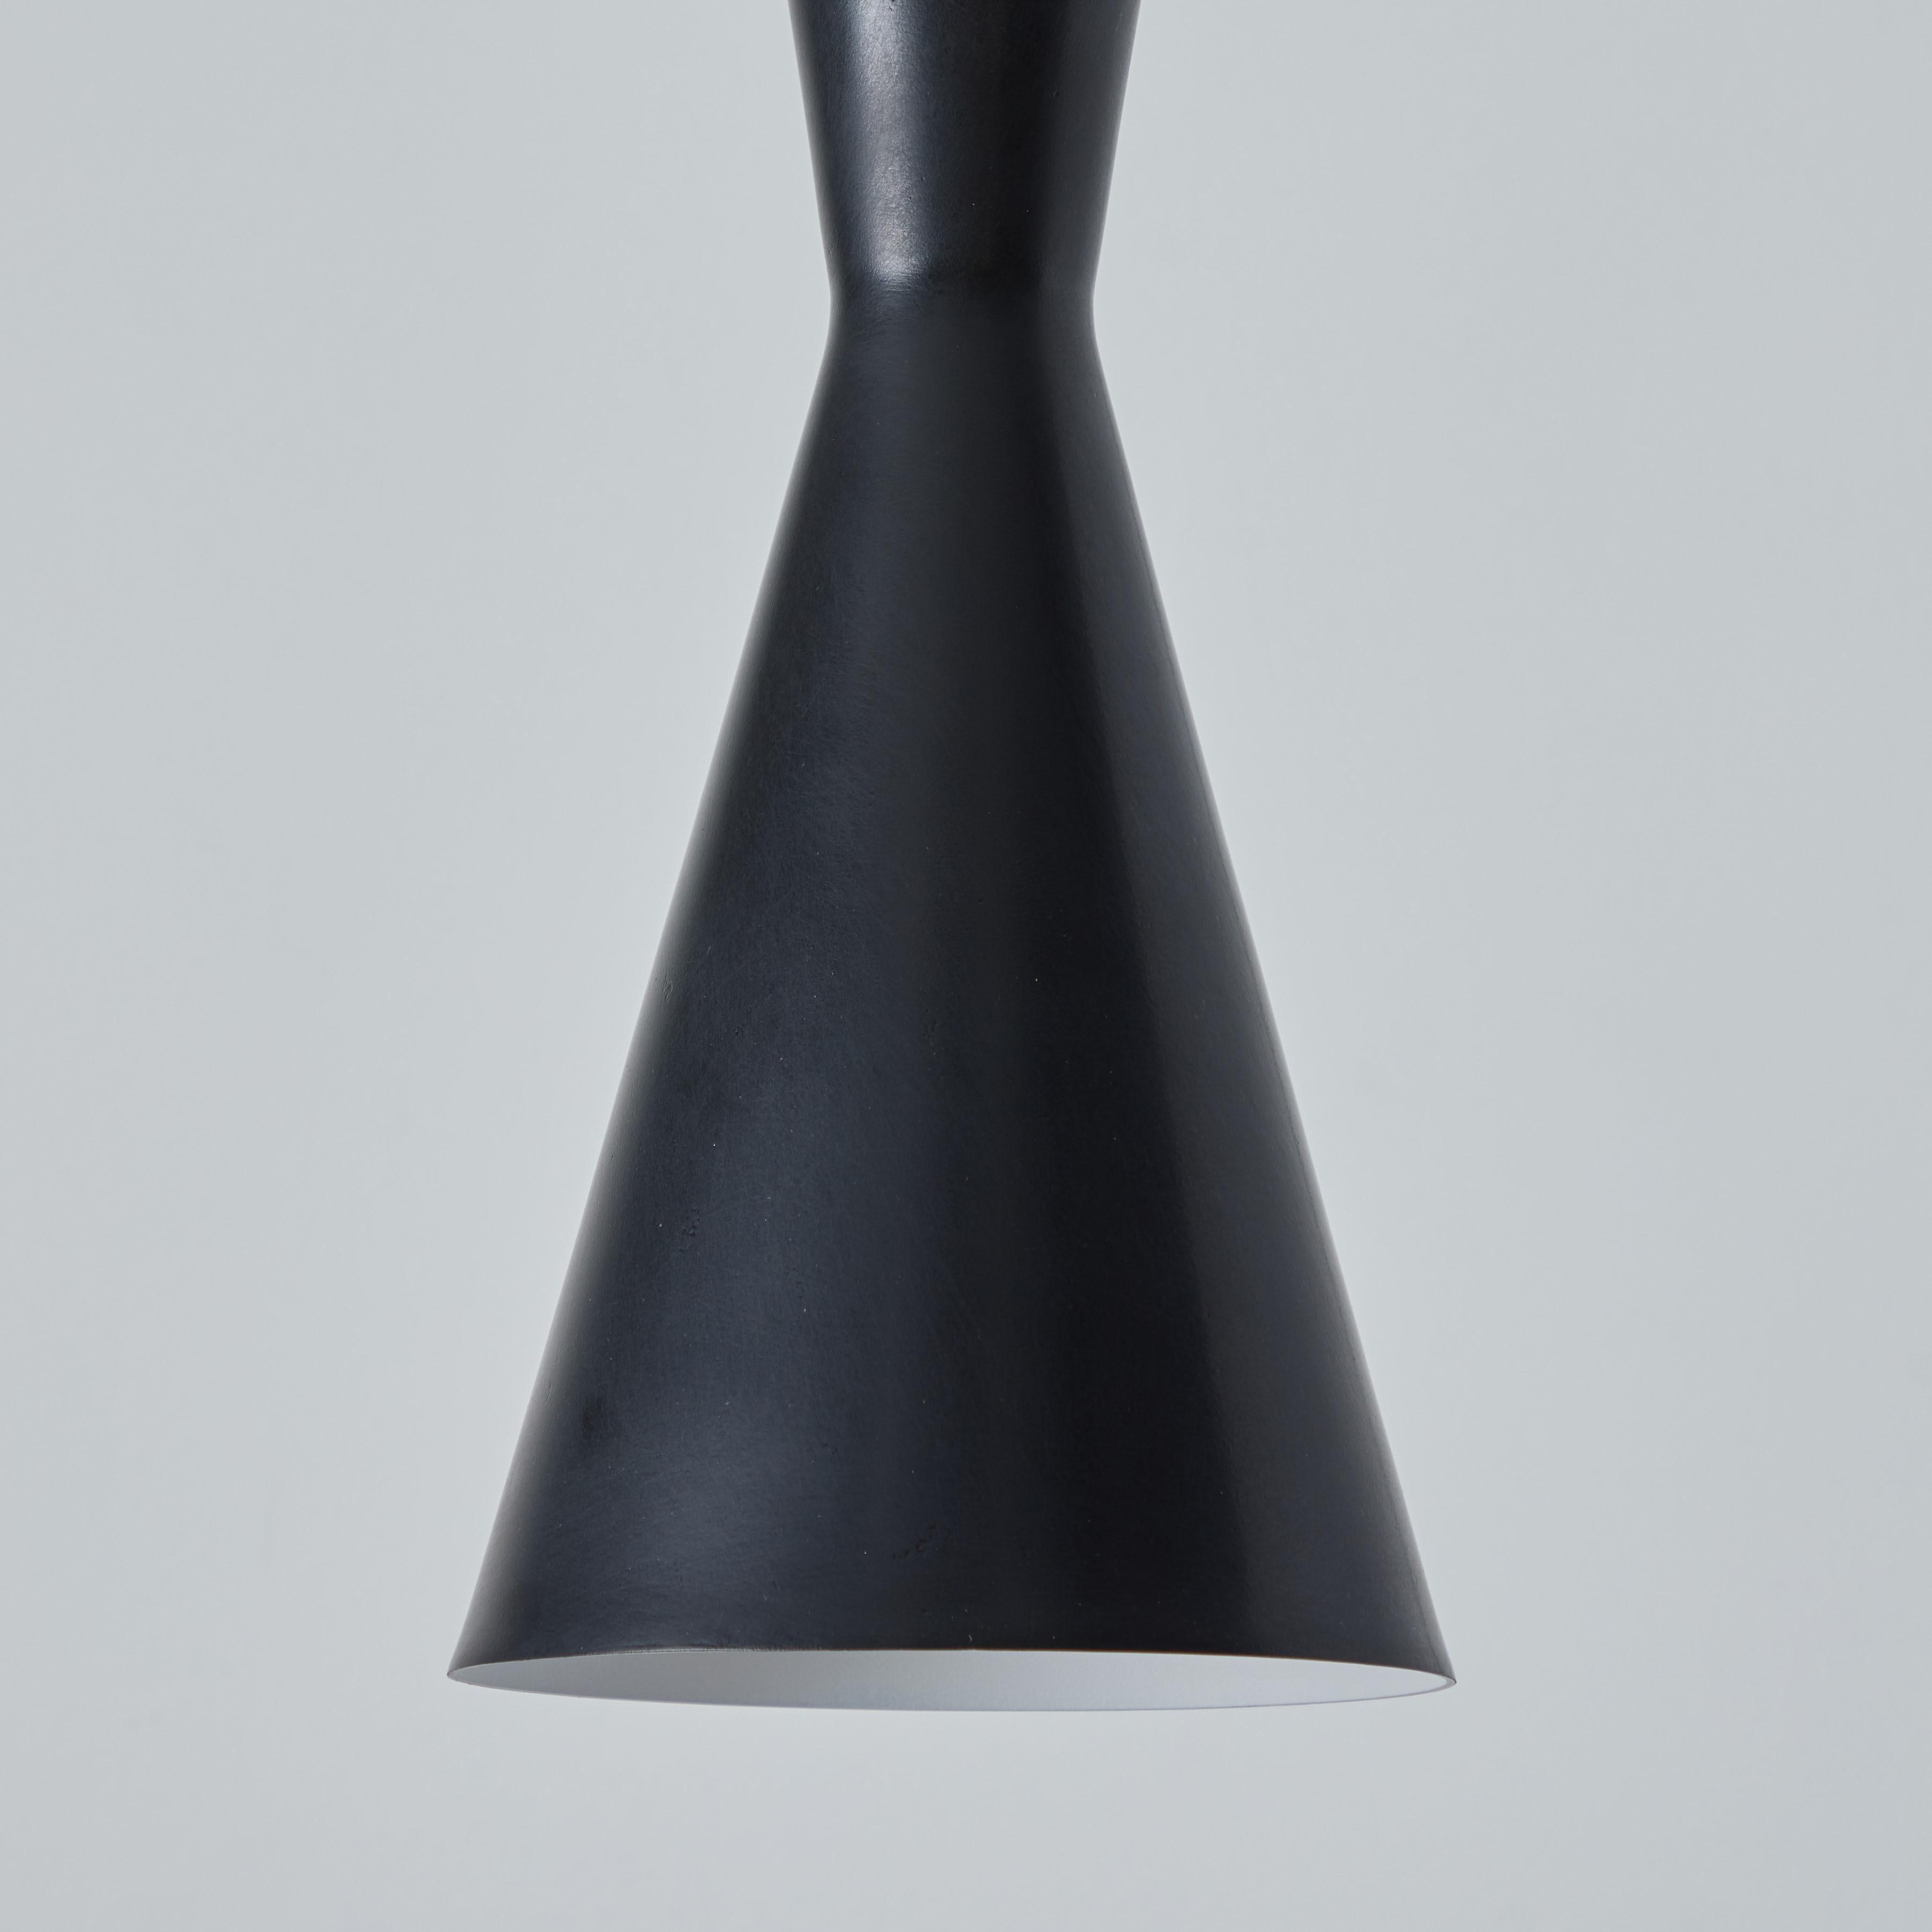 1950s Black Metal Diabolo Pendant Lamp Attributed to Stilnovo For Sale 1